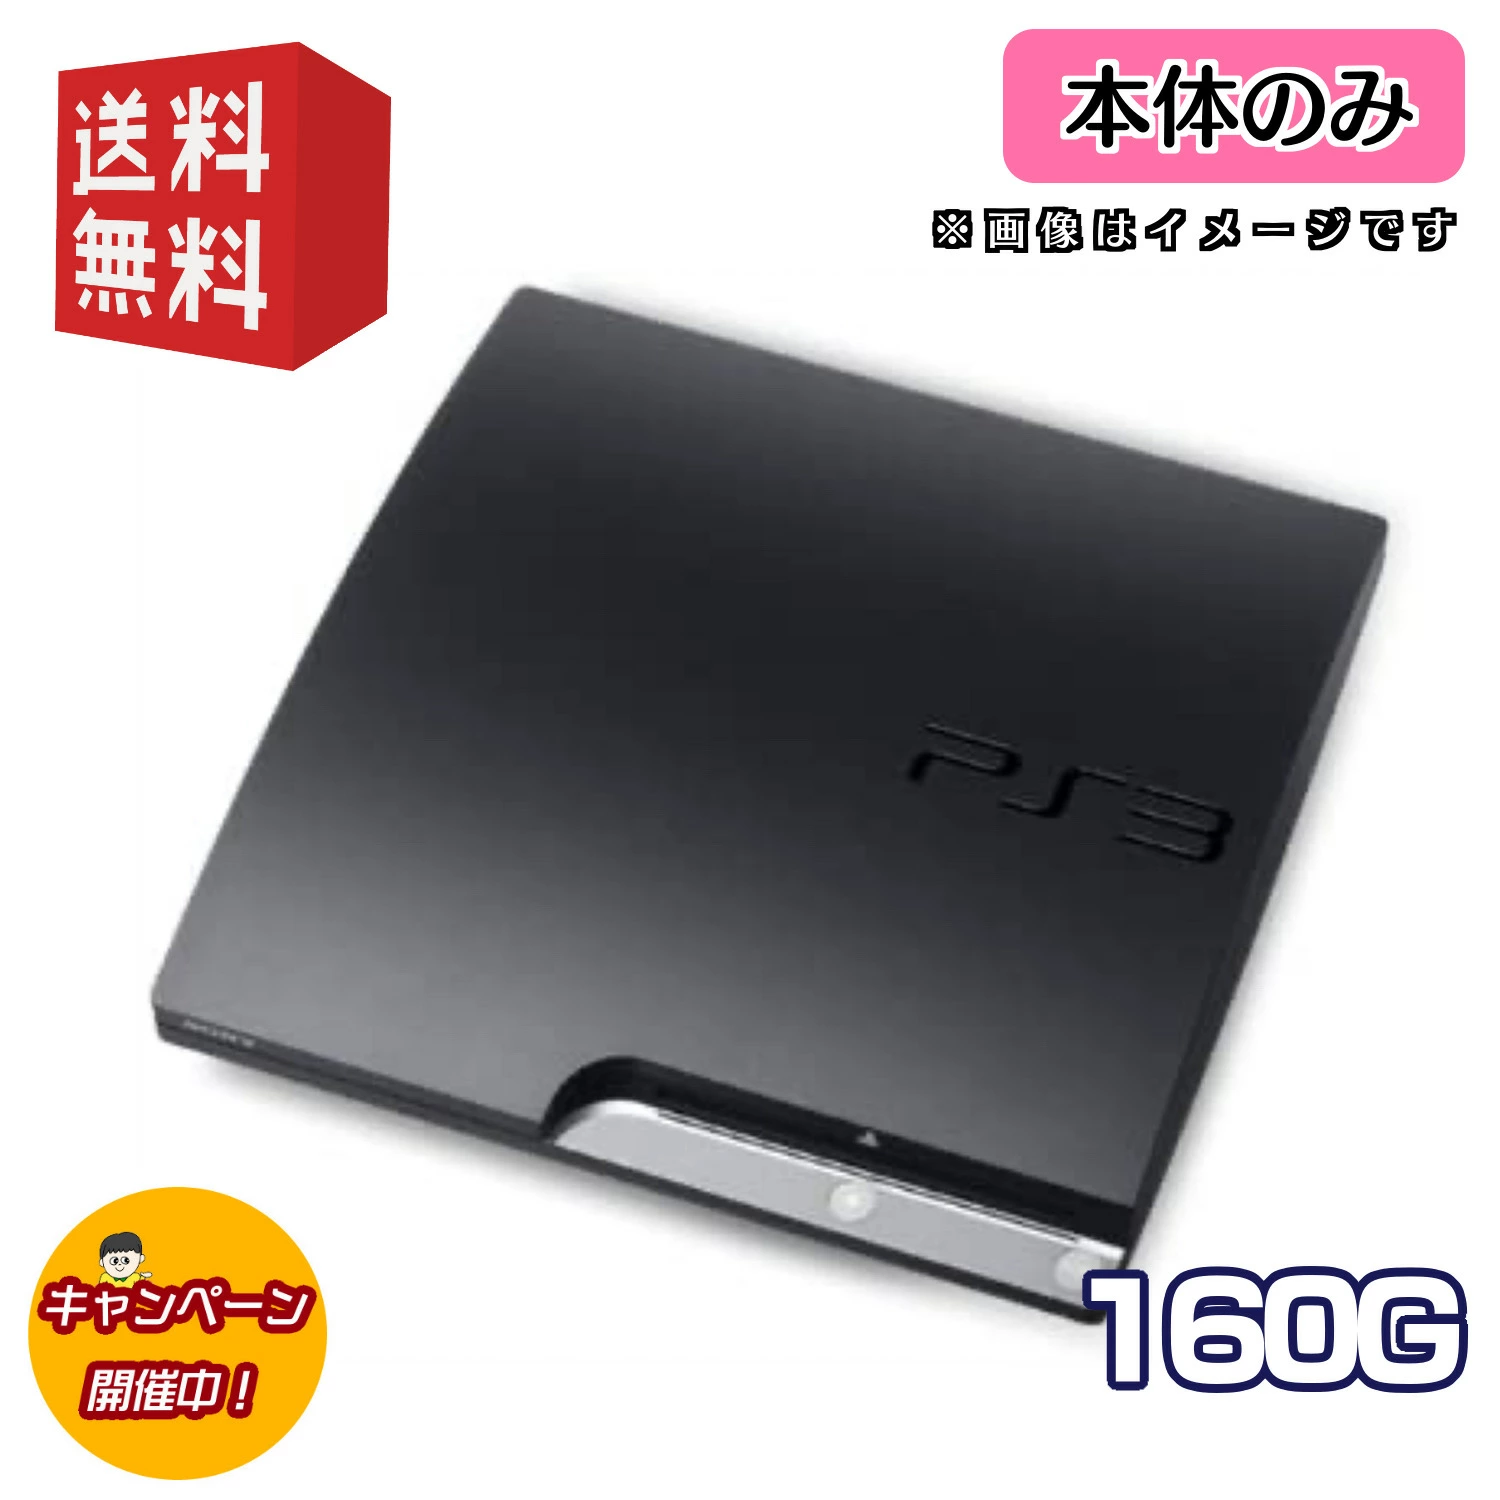 PS3 本体 【 本体のみ 】160GB Playstation3 プレイステーション3 CECH ...